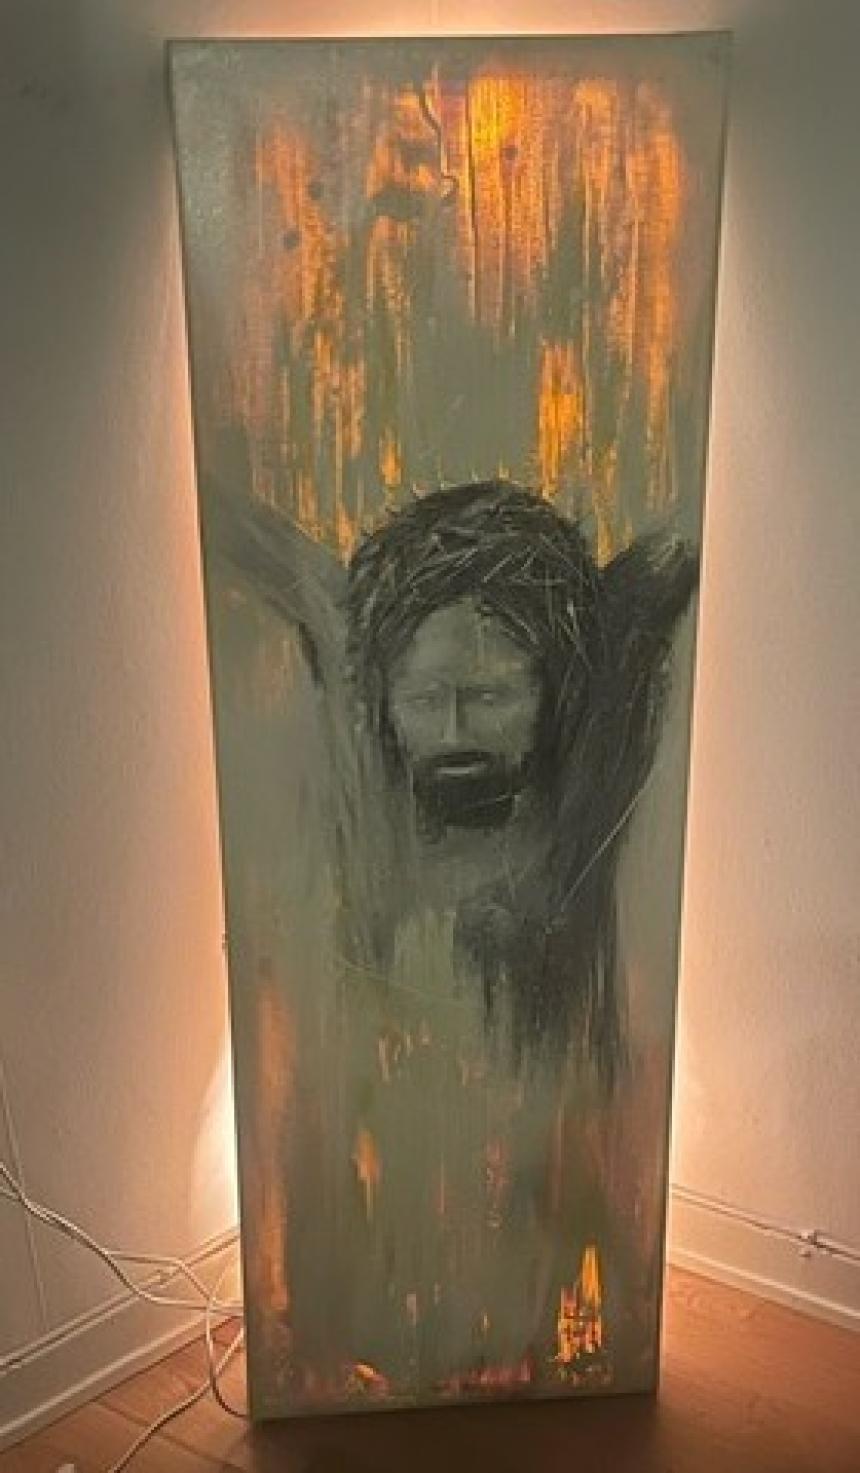 https://apg29.nu/bild/jesus-kristus-ar-det-sanna-ljuset-som-lyser-i-morkret-1702486342.jpeg - Jesus Kristus r det sanna ljuset som lyser i mrkret